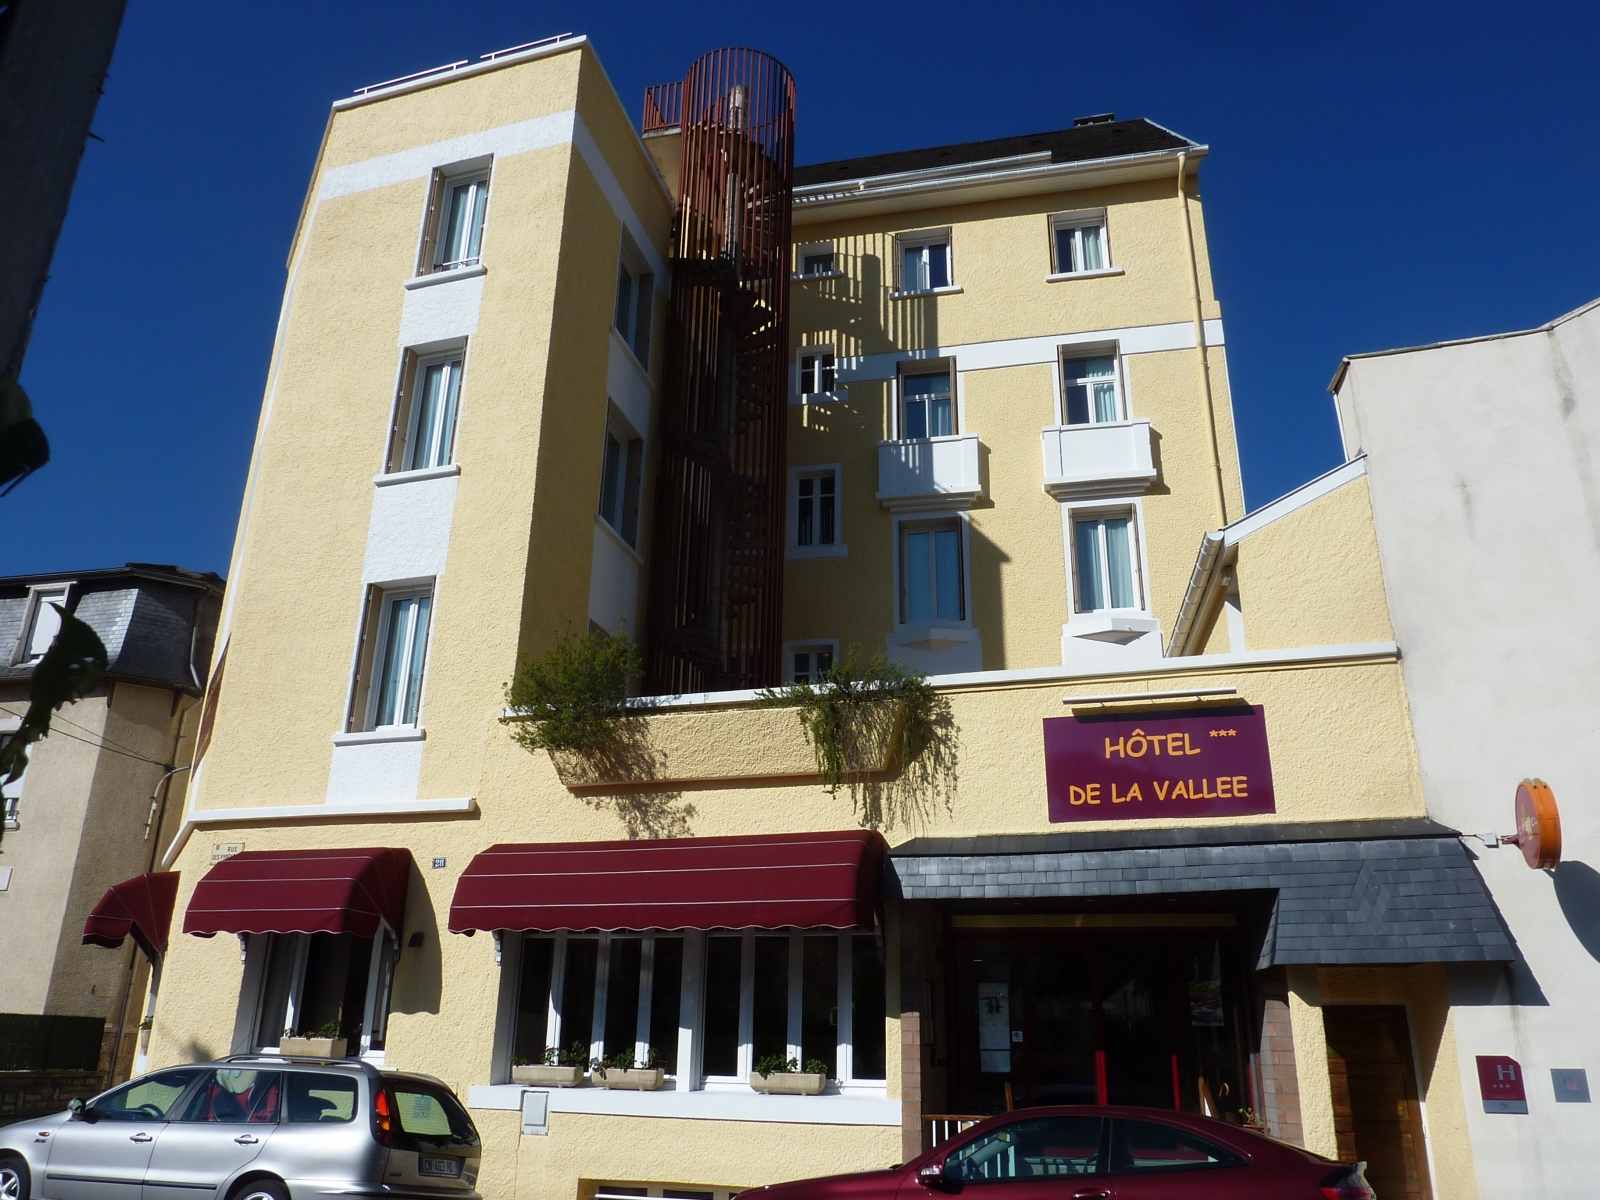 Hotel de la Vallee <br/>53.00 ew <br/> <a href='http://vakantieoplossing.nl/outpage/?id=14826f595c93334f063b0de56ca6b0b2' target='_blank'>View Details</a>